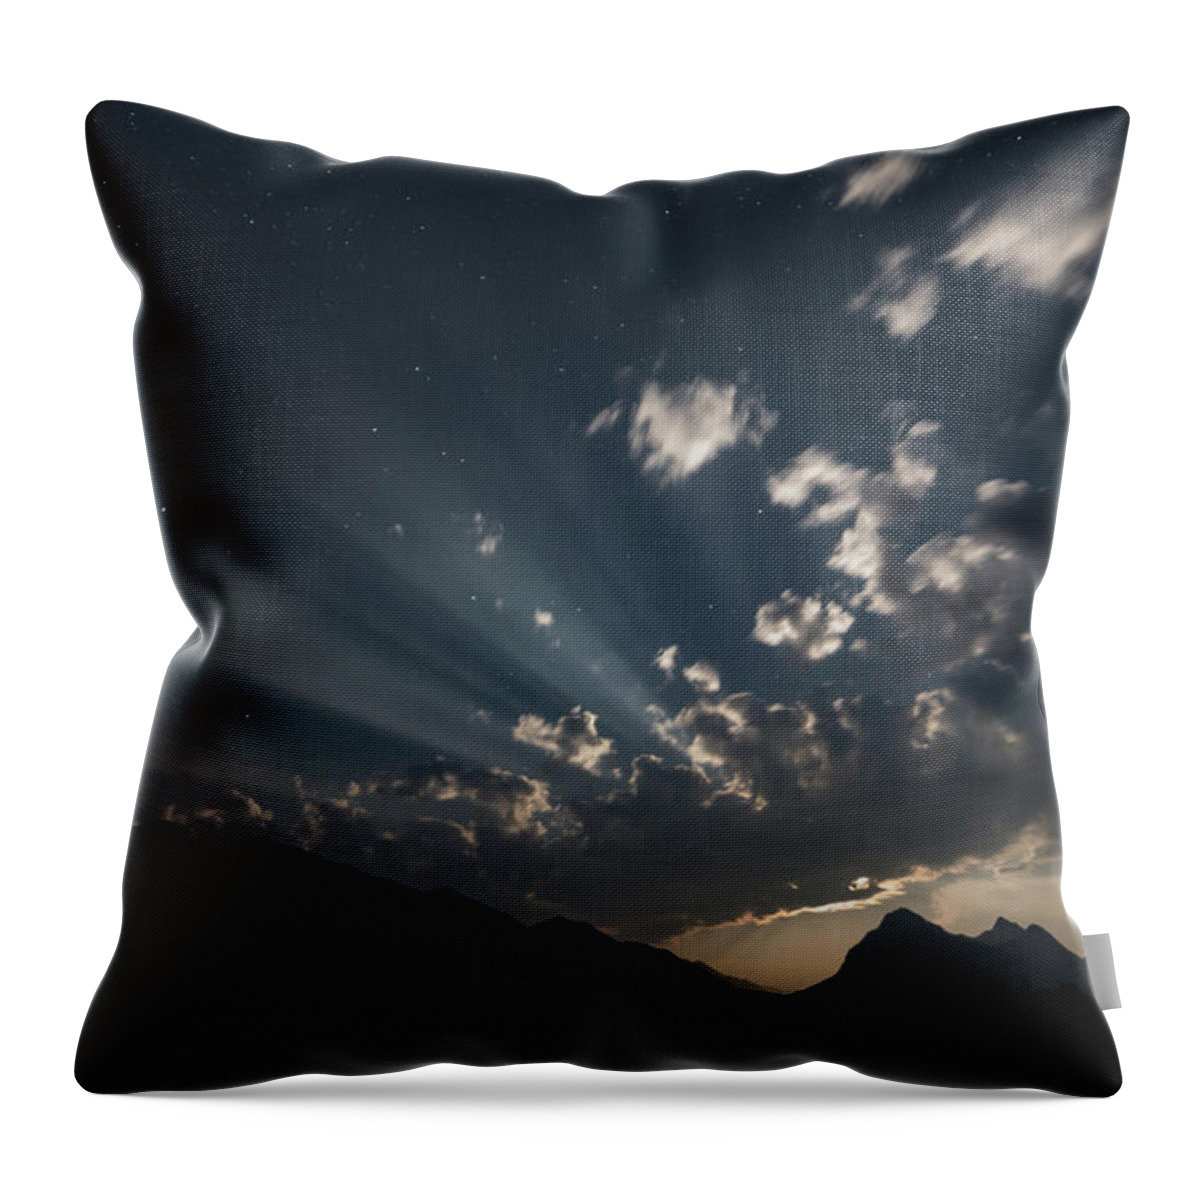 Abraham Lake Throw Pillow featuring the photograph Moonshine over Abraham Lake by Joe Kopp